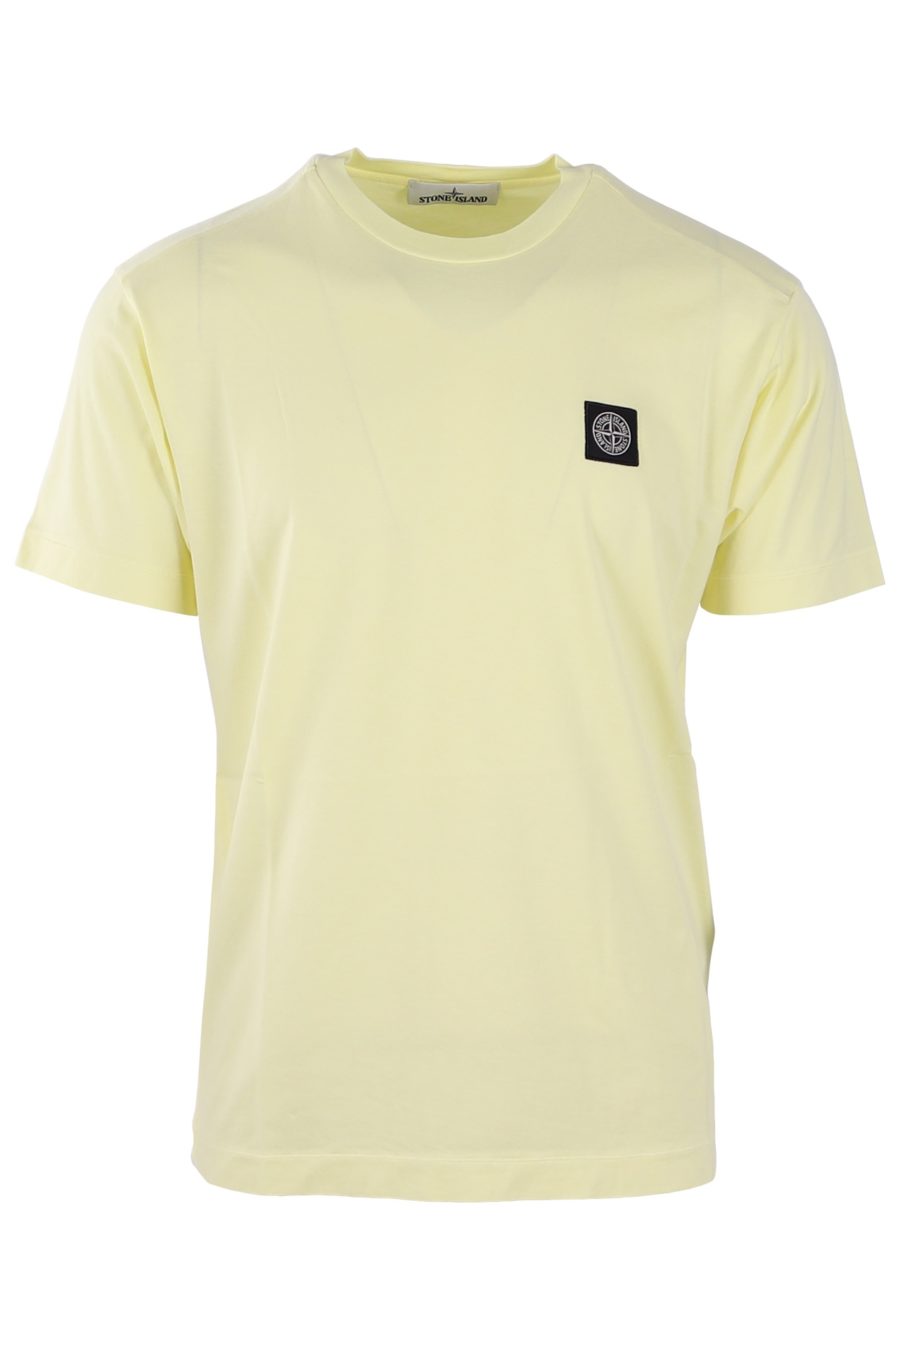 Camiseta Stone Island amarilla con parche - 2f1569937aab6bb8a54e8bef7cfa2a845617f7a4